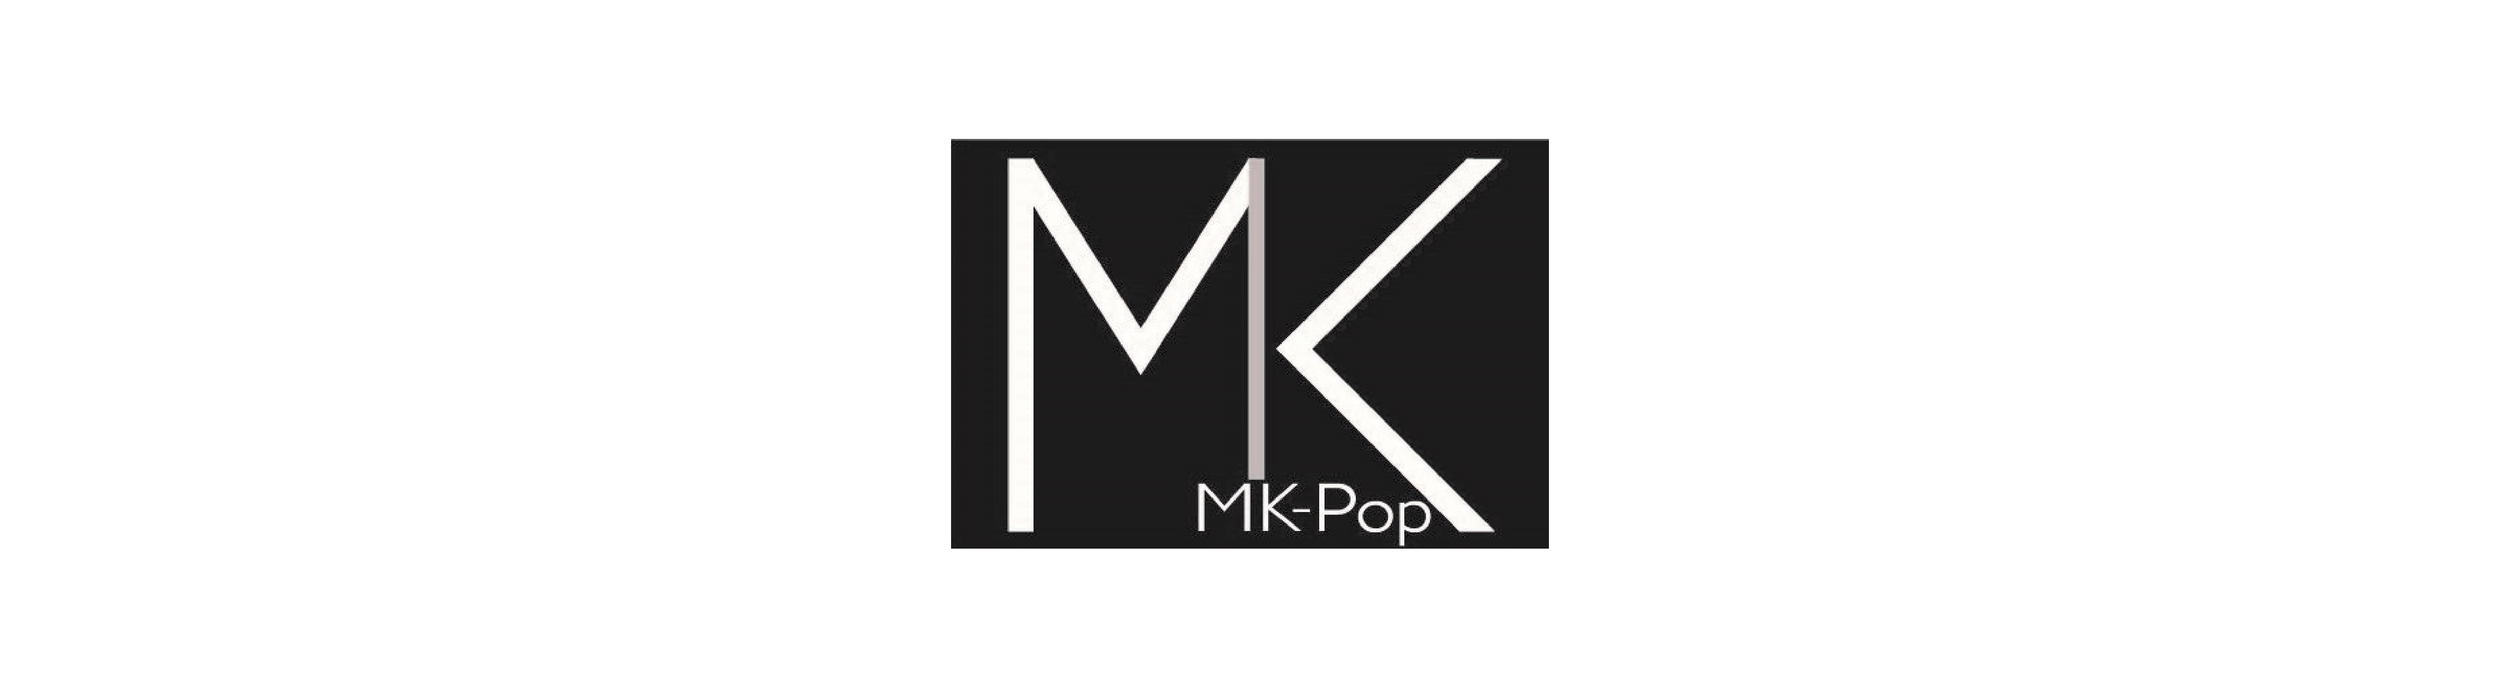 Mkpop logo